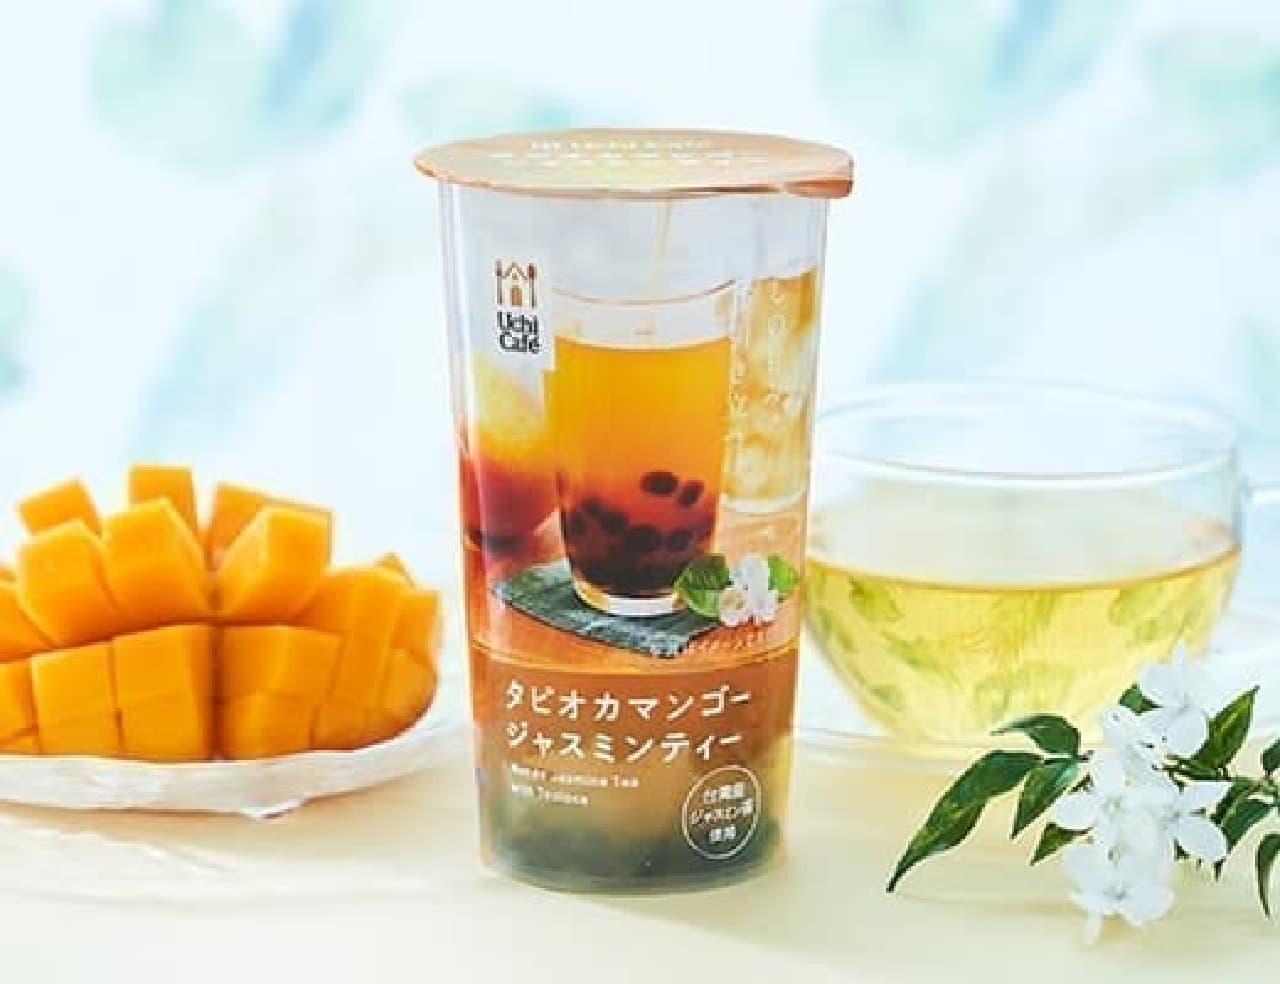 Lawson "Uchi Cafe Tapioca Mango Jasmine Tea 280g"